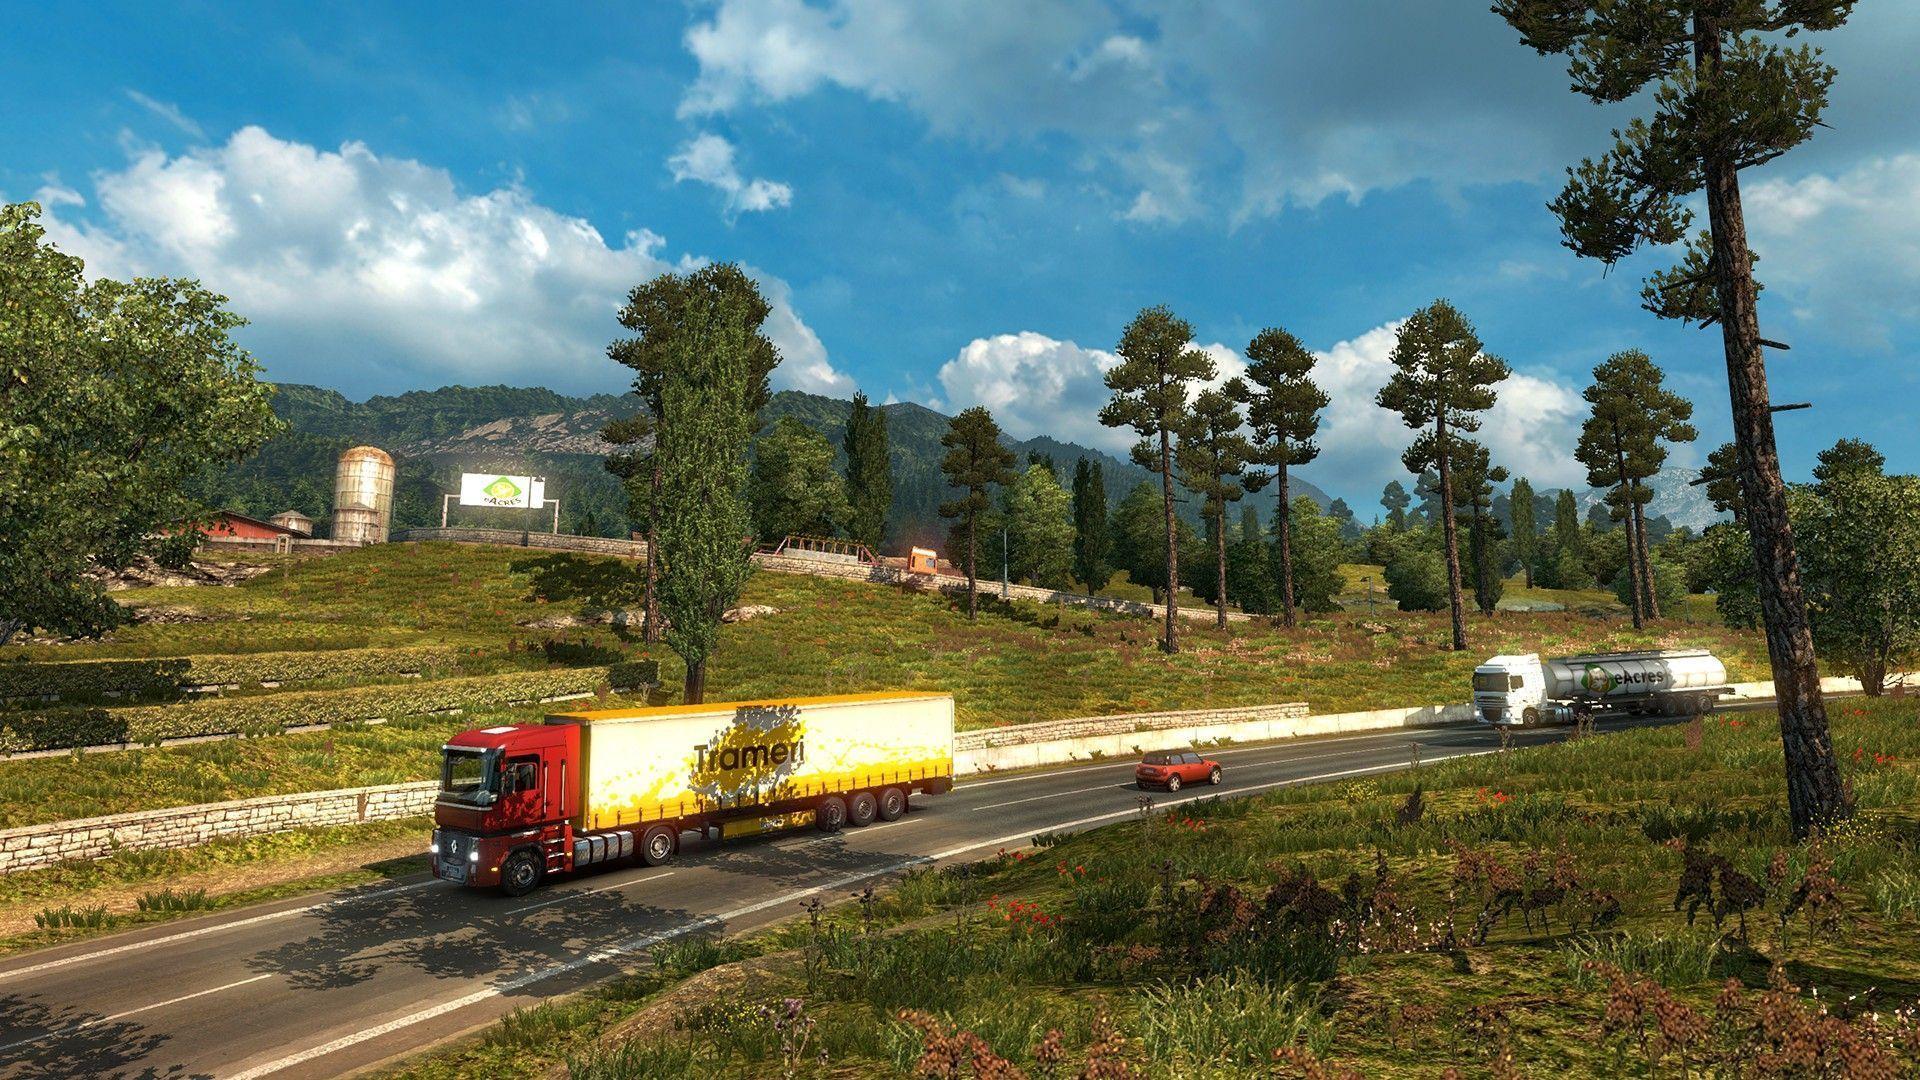 euro truck simulator 2 forums